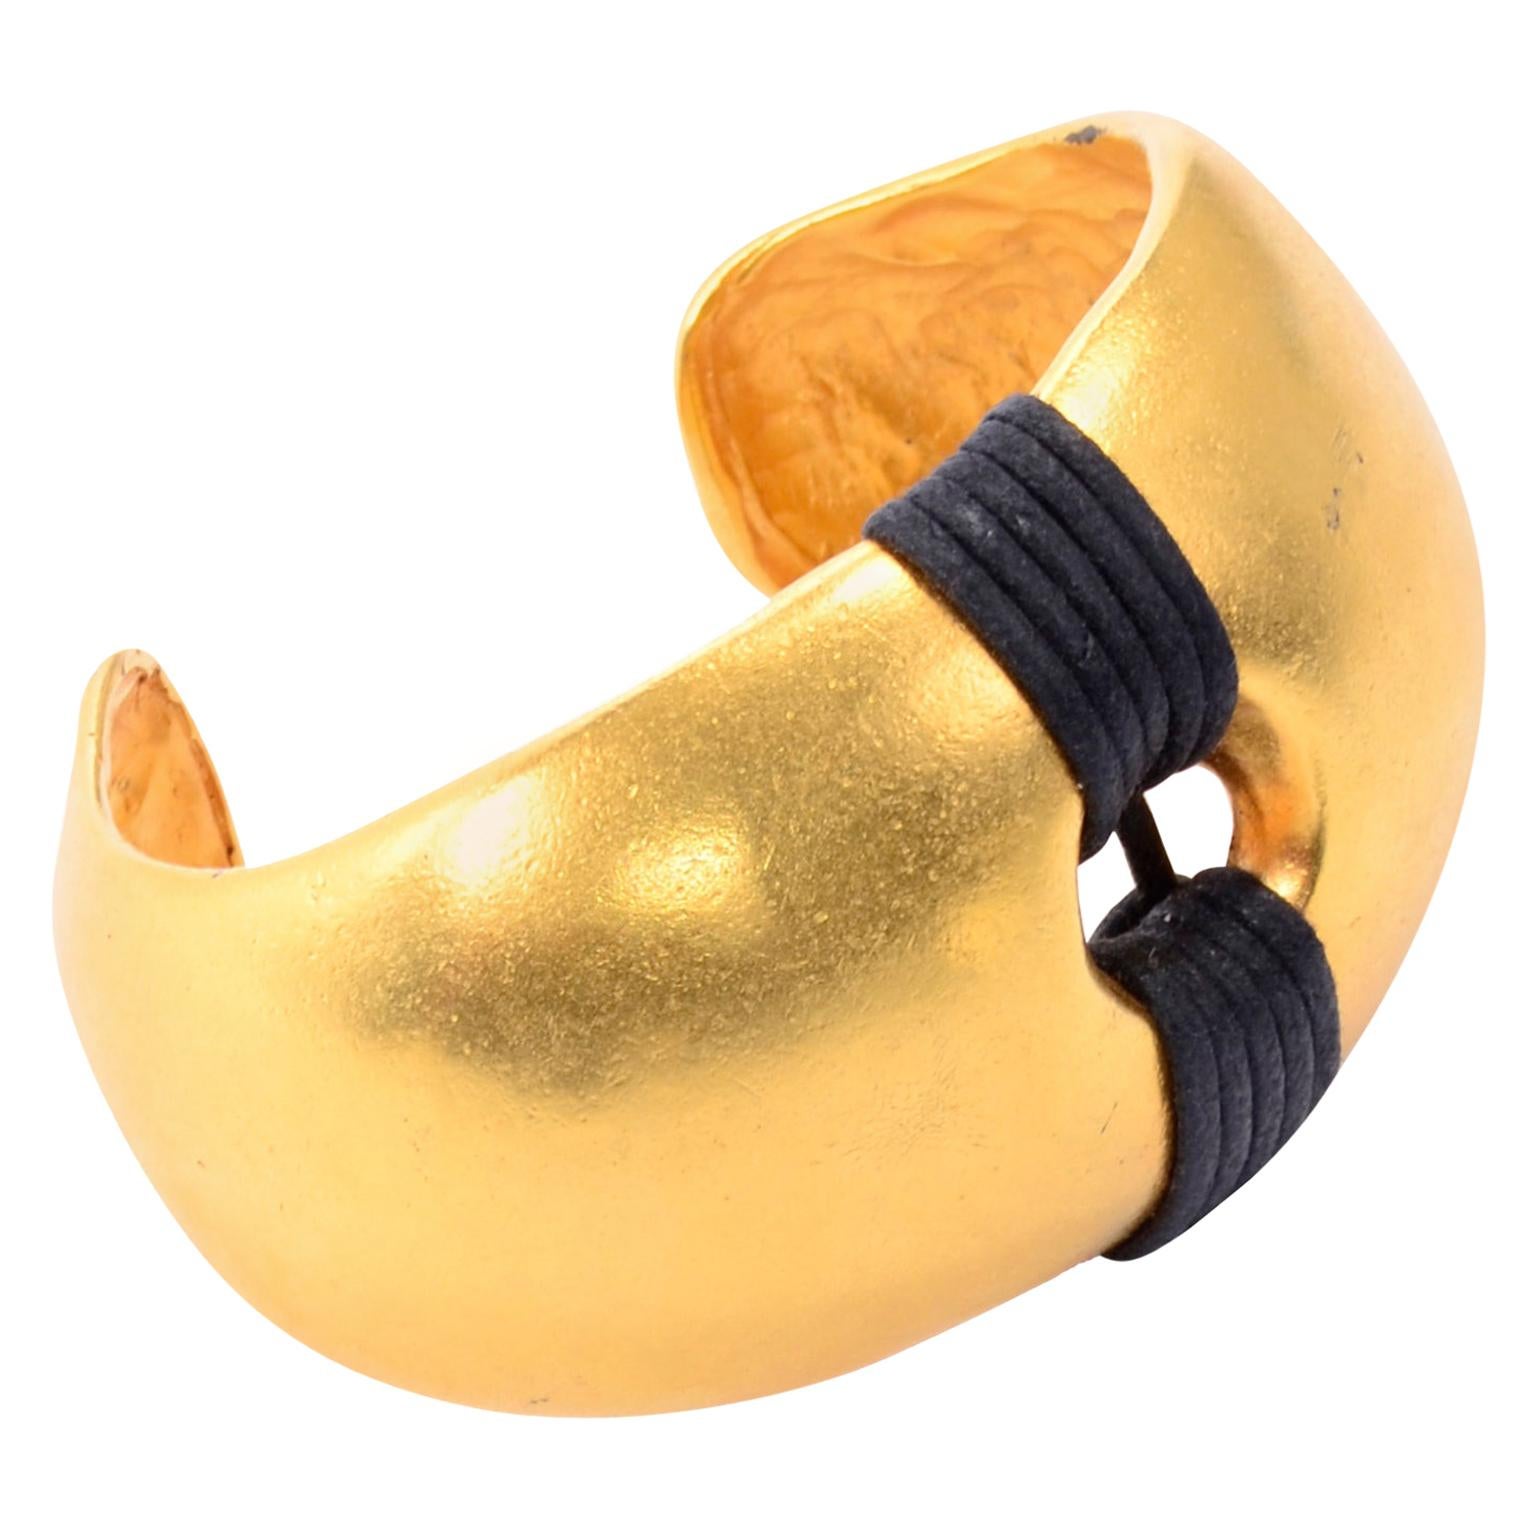 1980s Vintage Gold Plated Cuff Modern Bracelet With Black Band Details For Sale